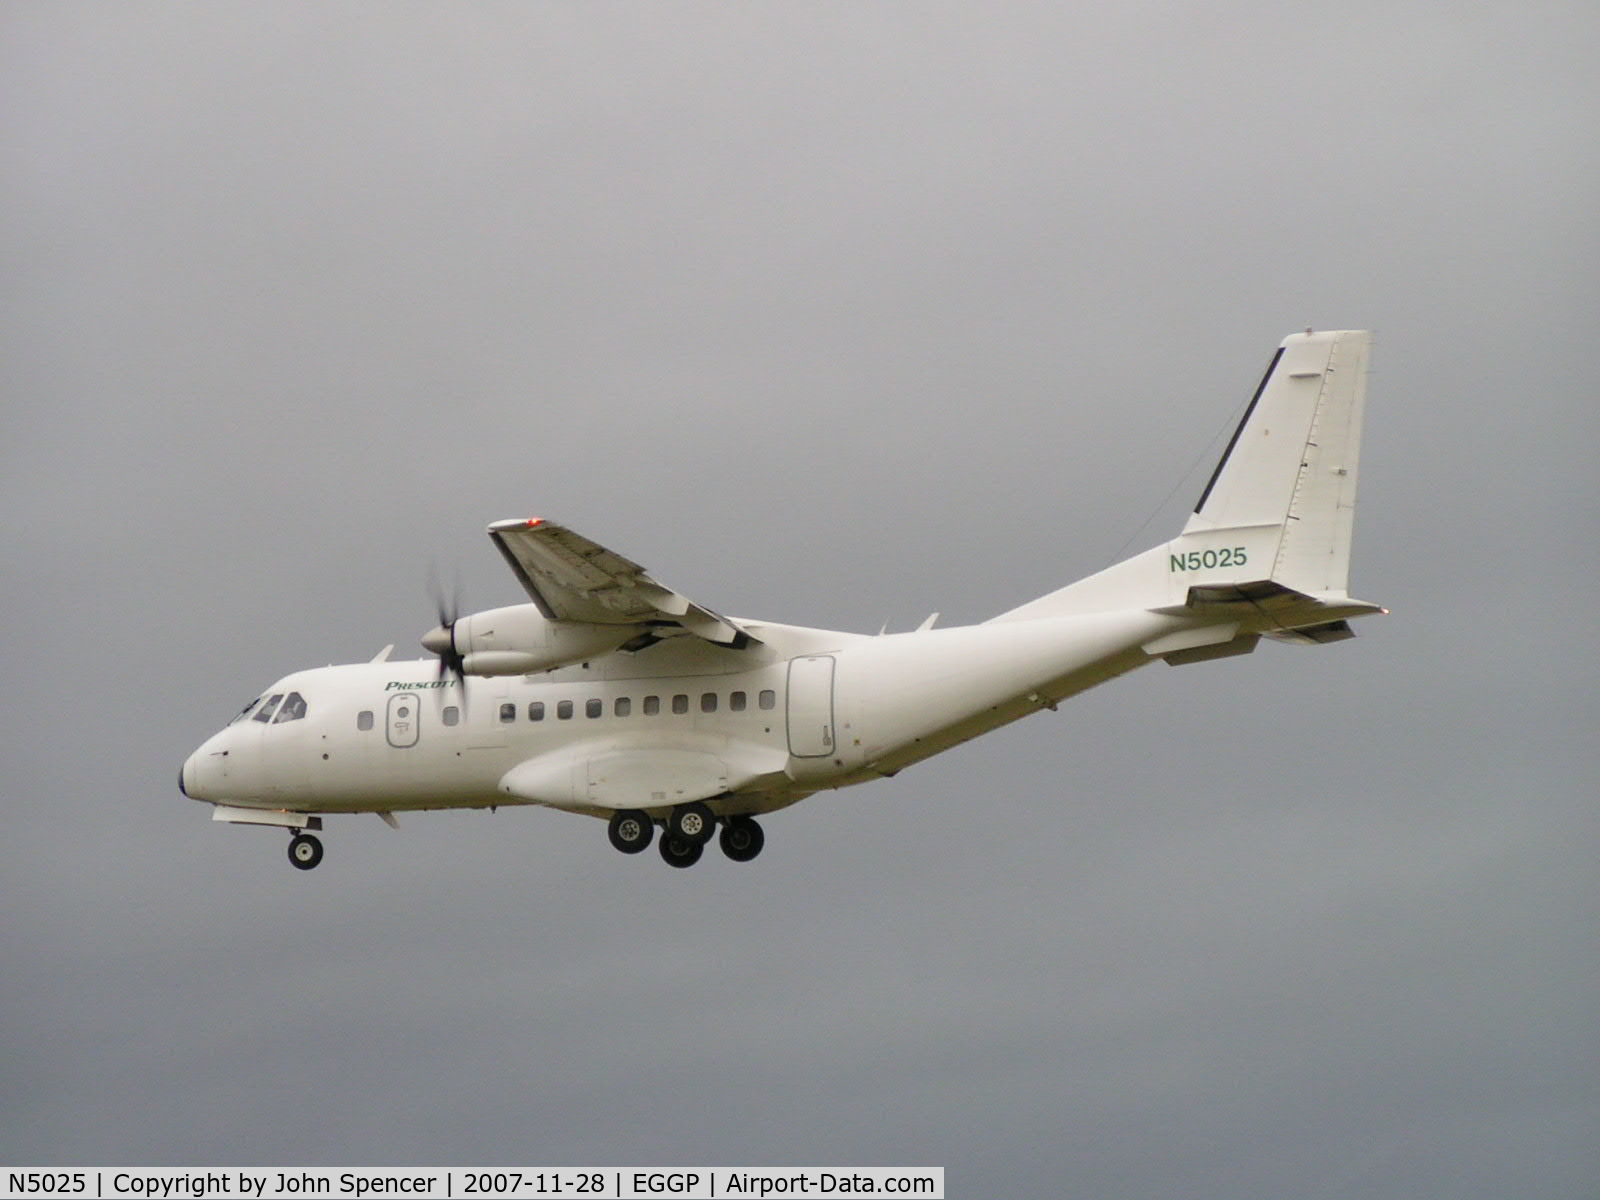 N5025, 1990 CASA CN-235-200 C/N C030, Taken as about to land at Liverpool Airport, UK